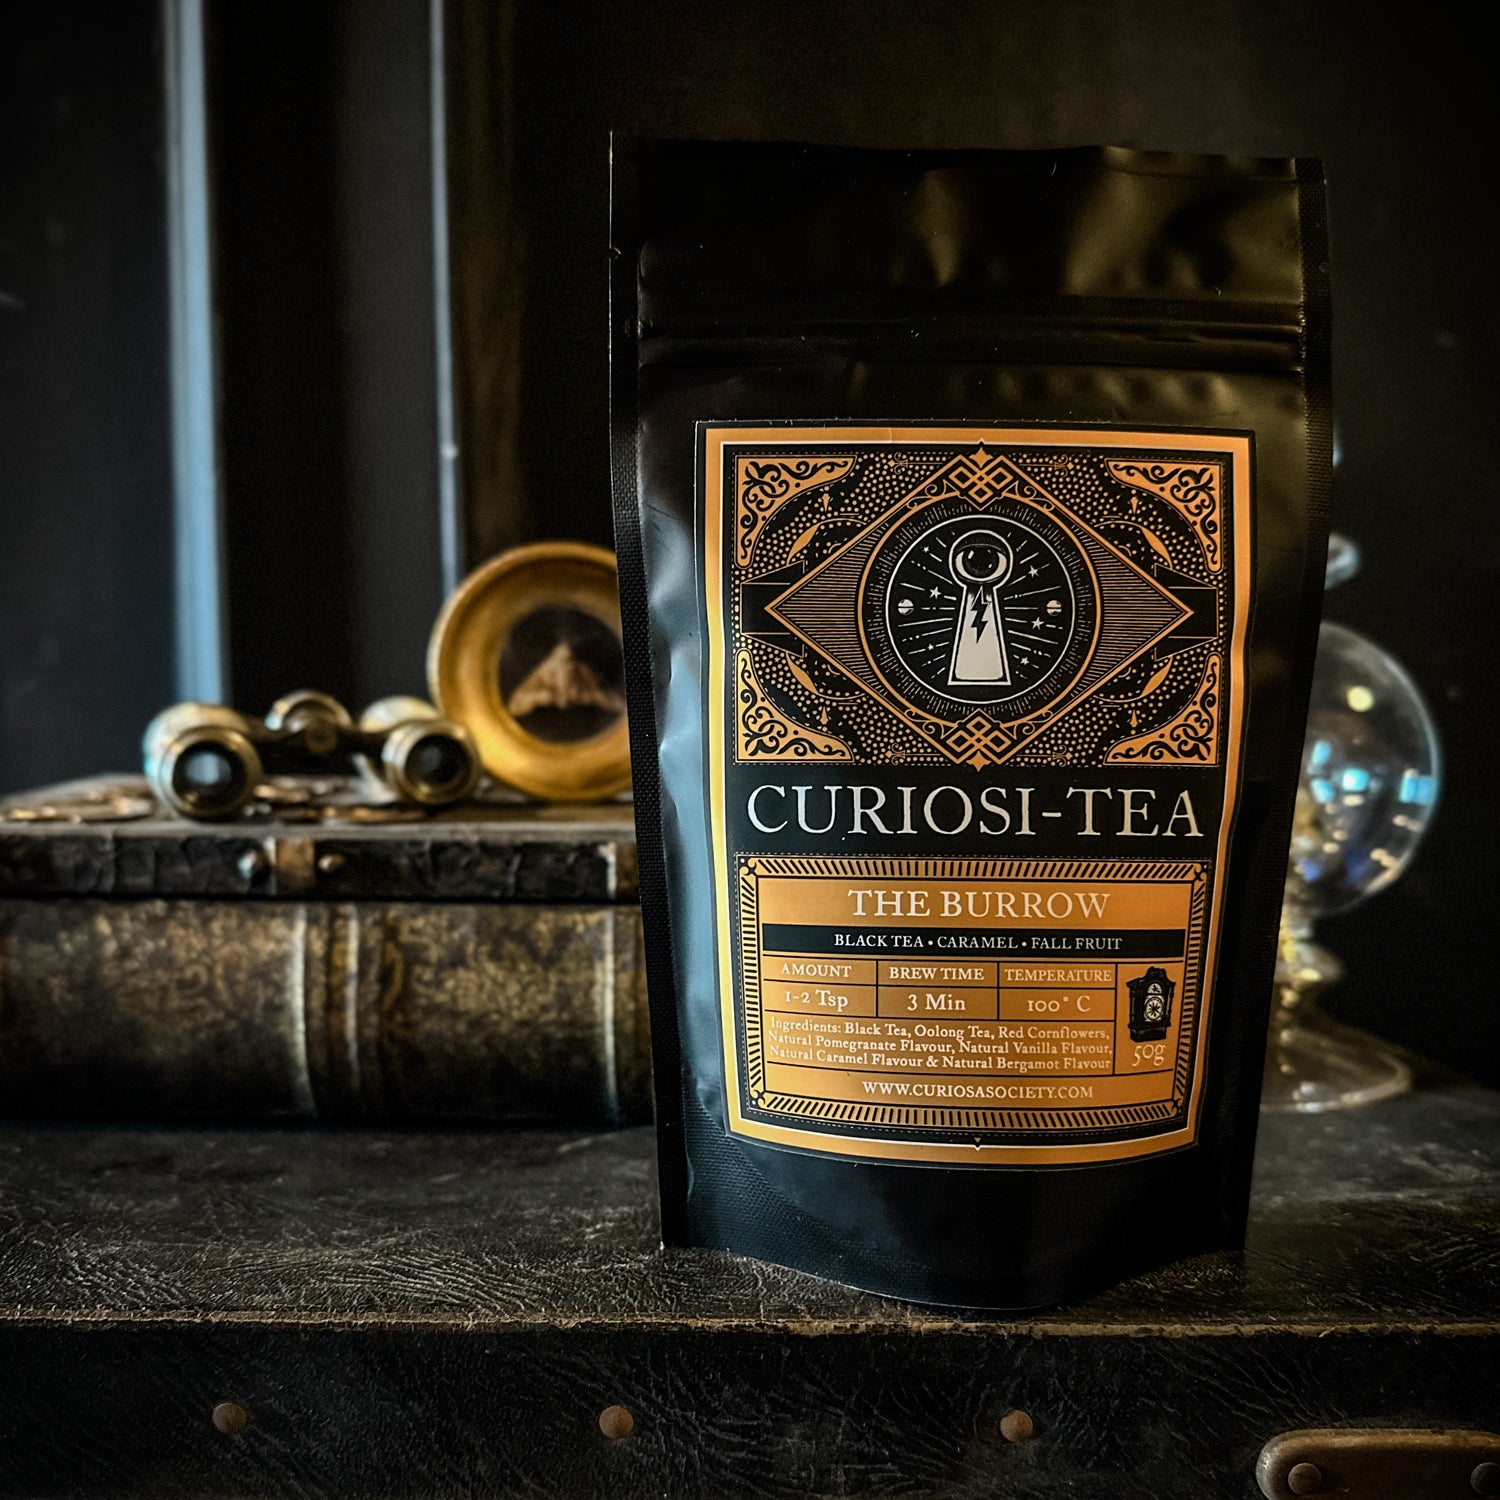 The Burrow Curiosi-tea